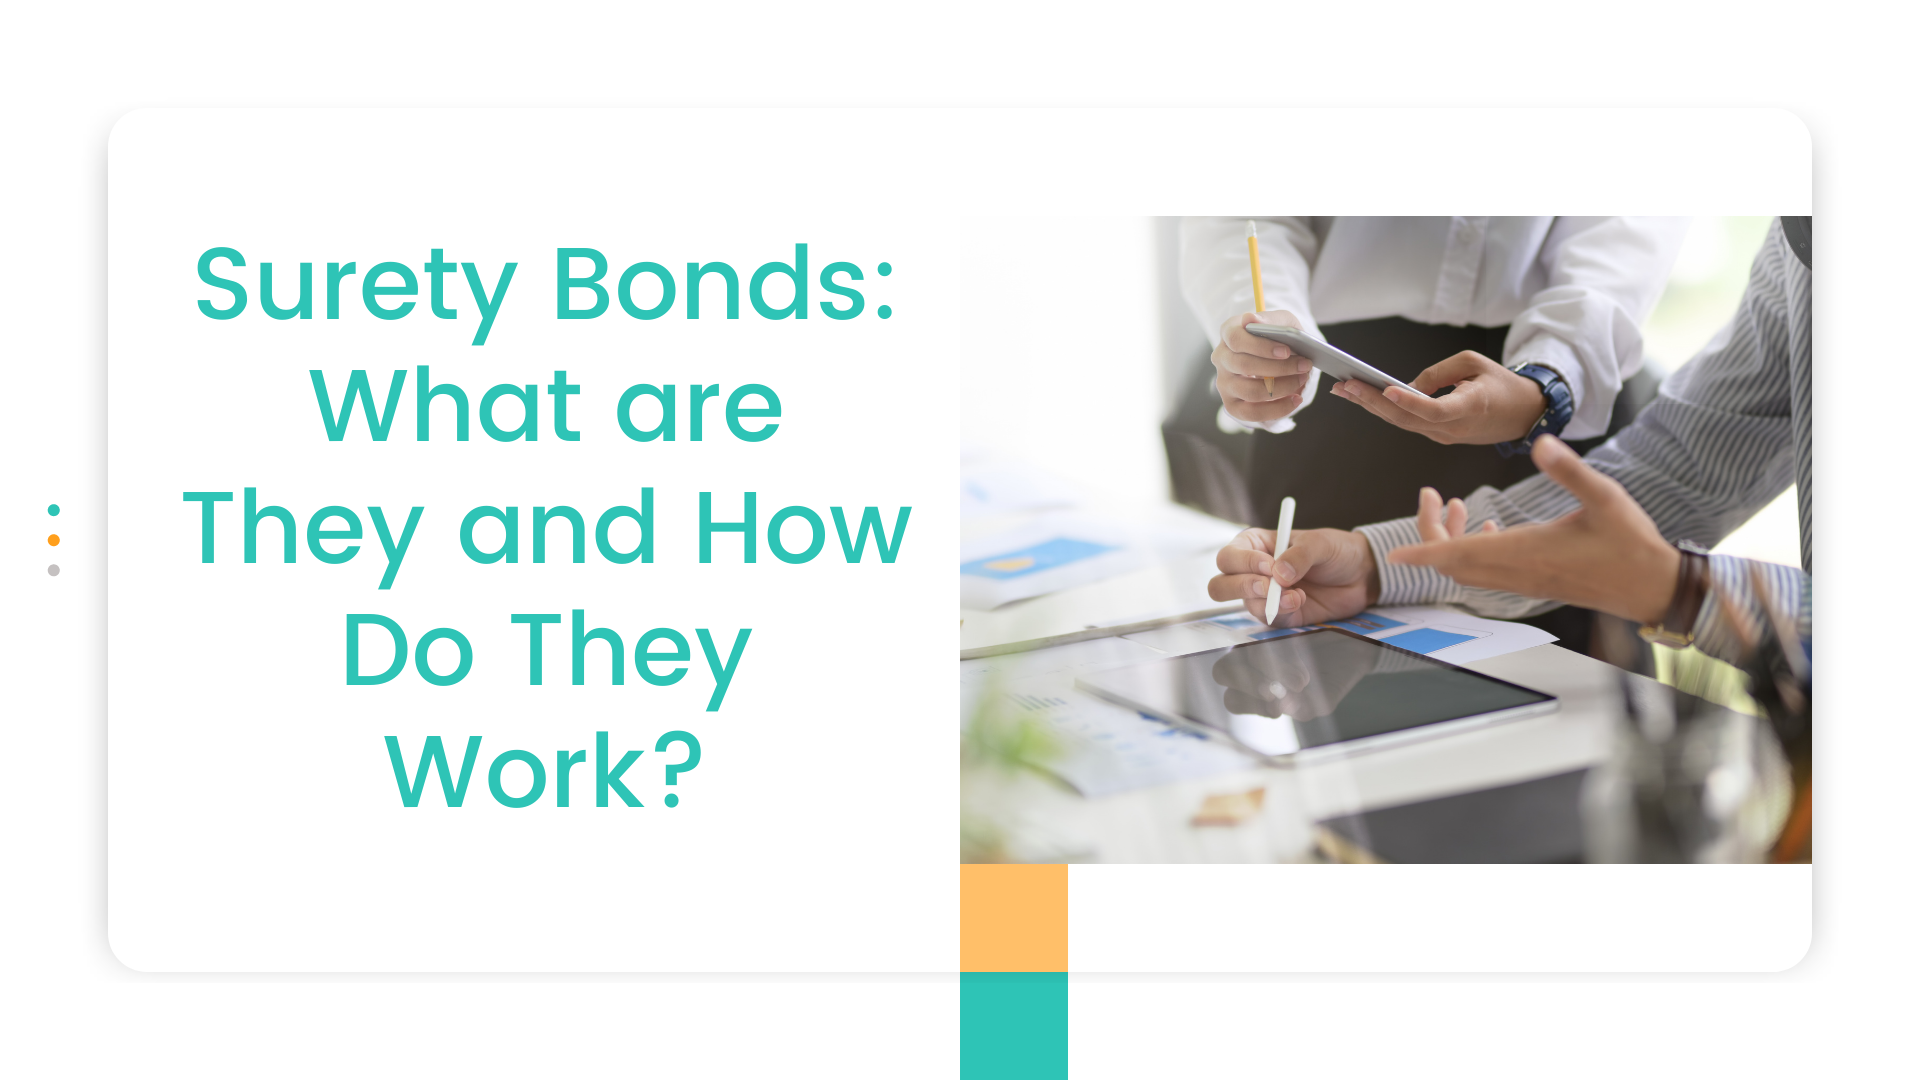 surety bond - What is the definition of a surety bond - presentation